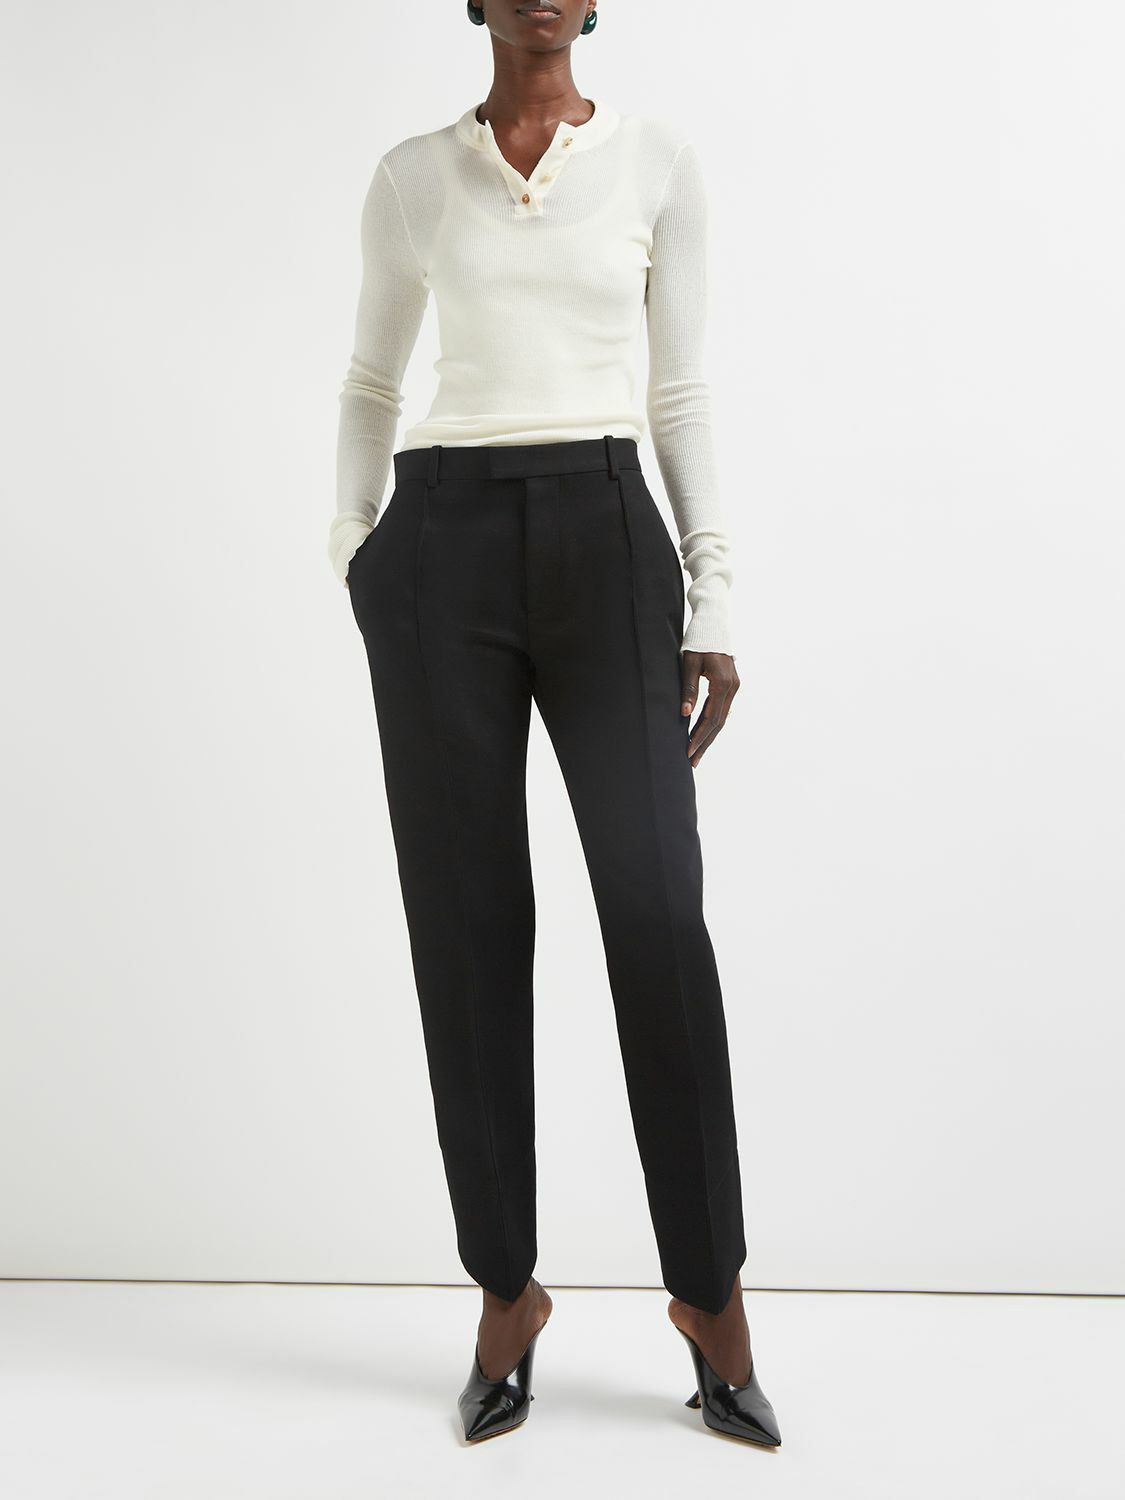 Bottega Veneta® Women's Curved Shape Wool Pants in Black. Shop